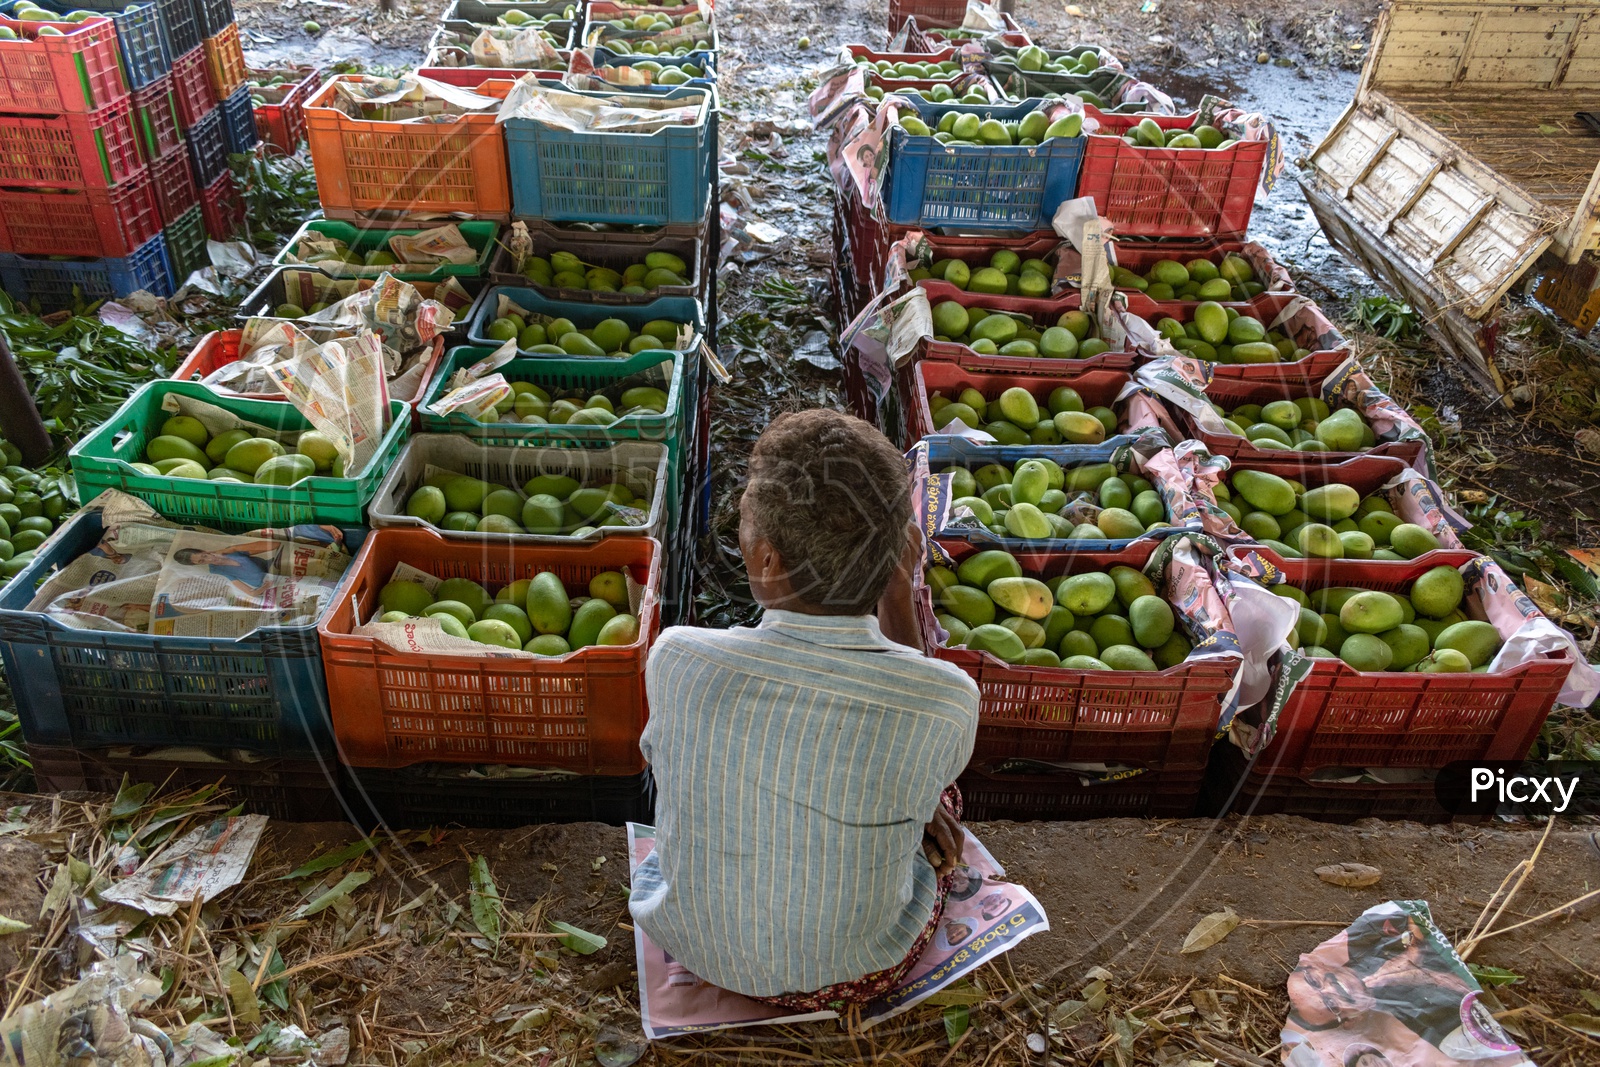 Farmer with his load of mangoes in baskets at Kothapet Fruit market, Dilsukhnagar, Hyderabad.